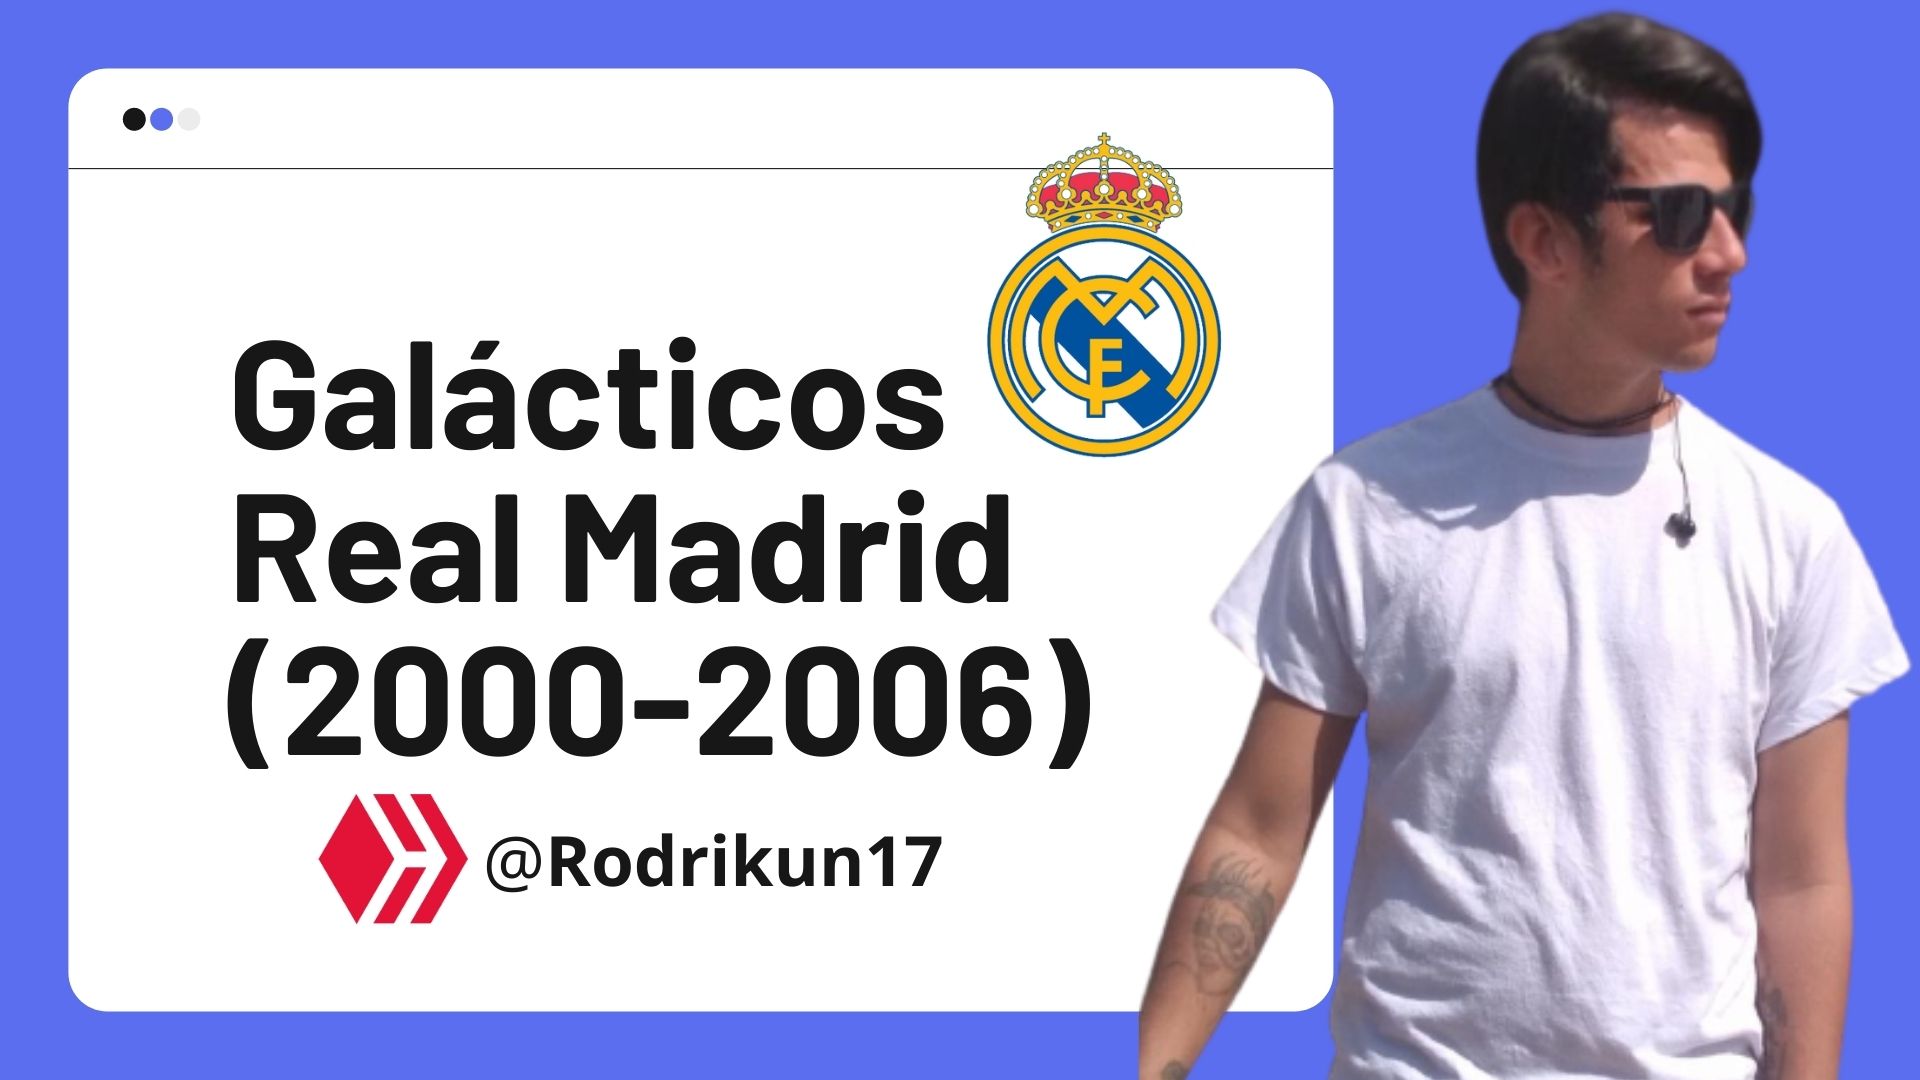 Galácticos Real Madrid (2000-2006).jpg